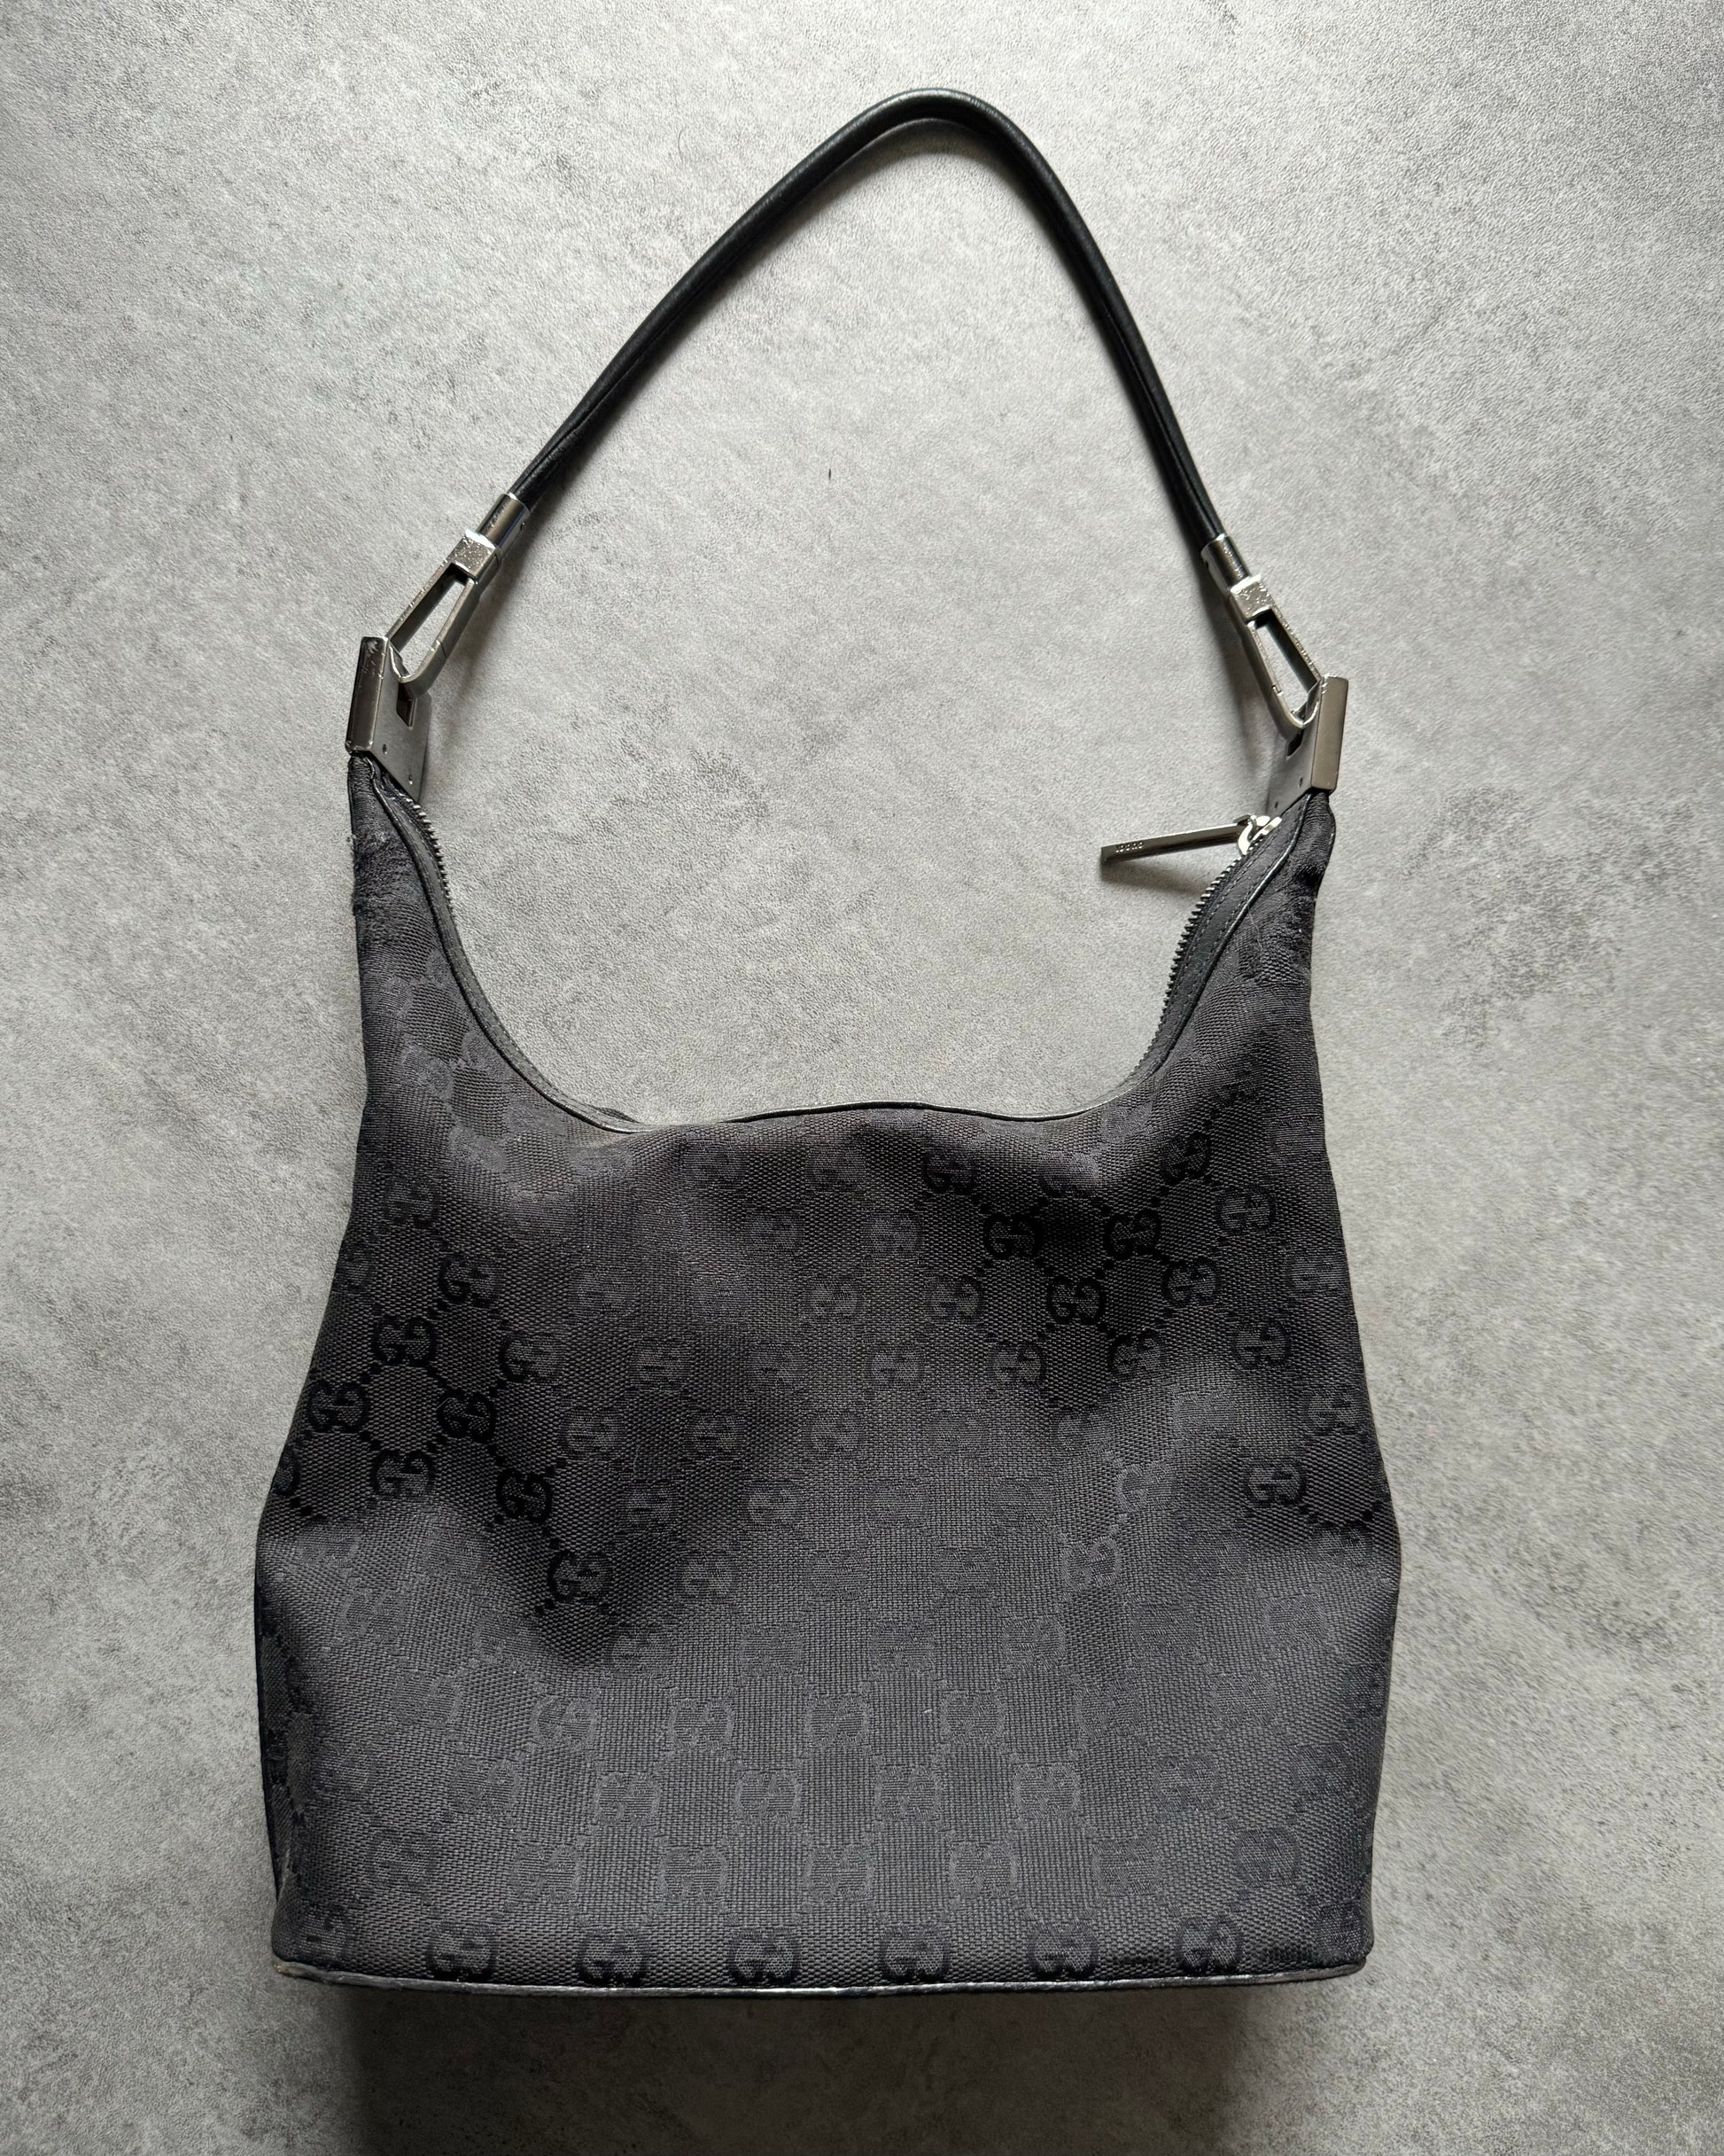 FW2002 Gucci Black Monogrammed Black Bag by Tom Ford (OS) - 3